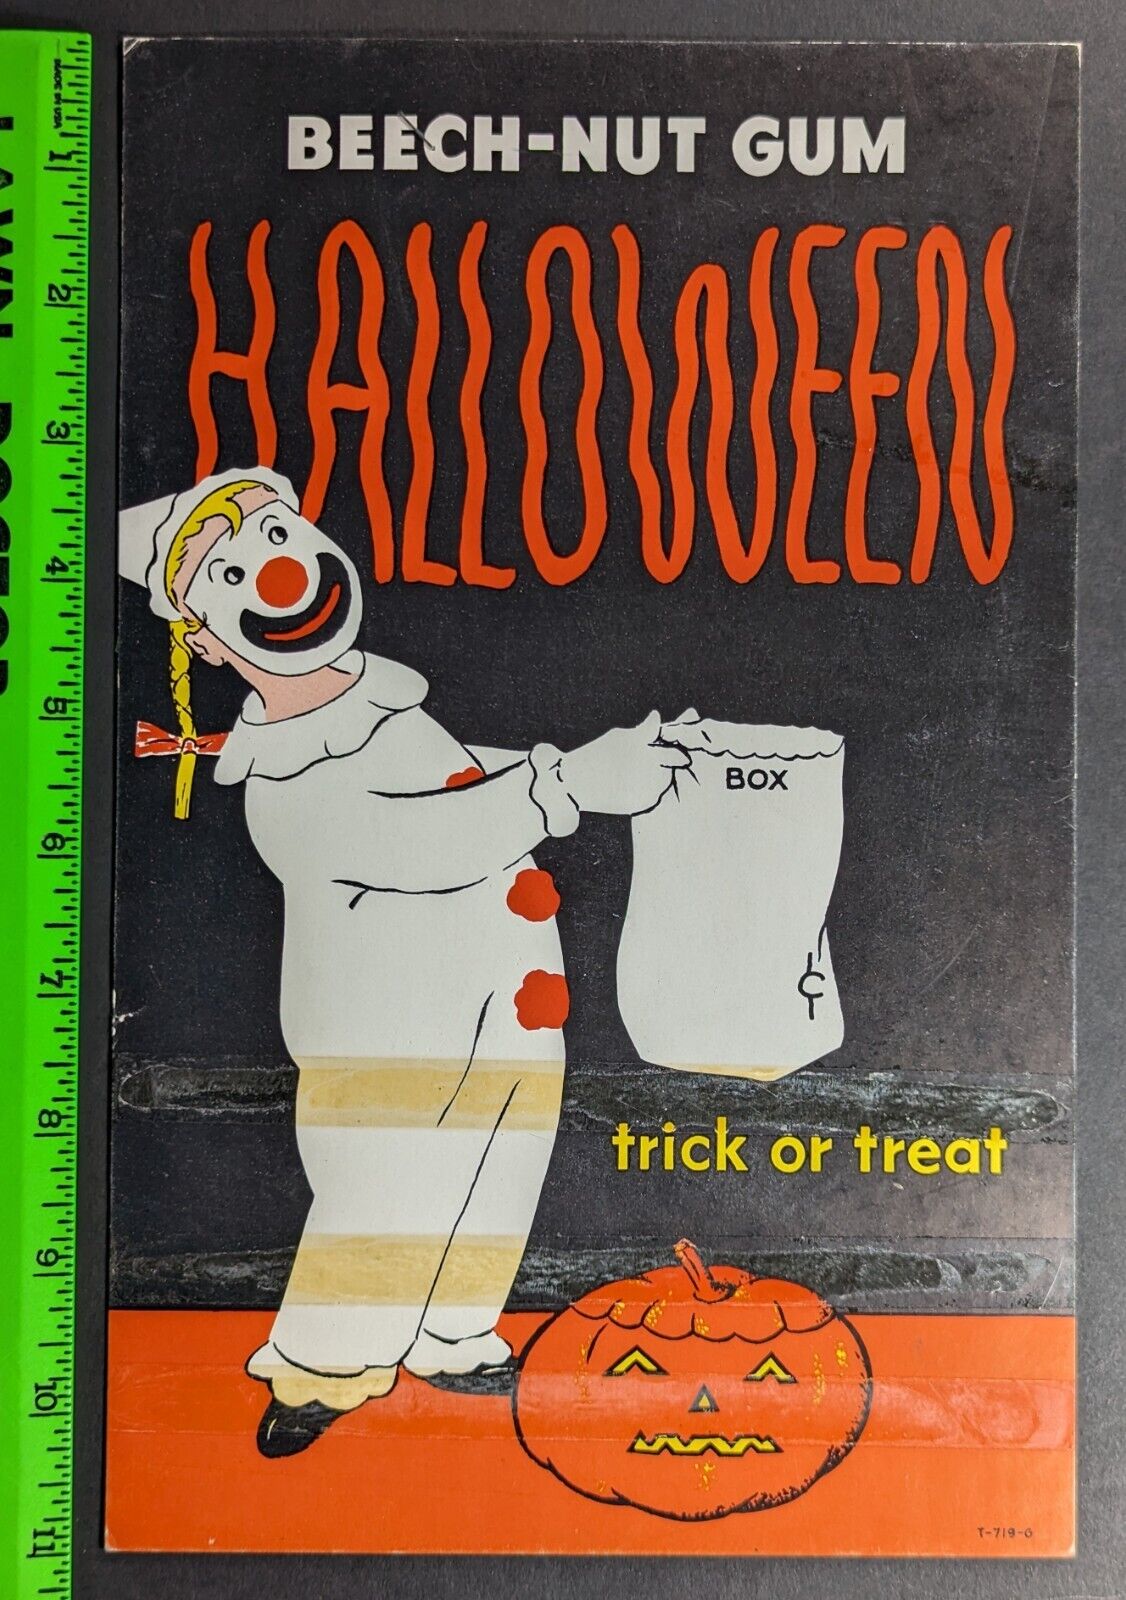 Vintage 1954 Beech-Nut Gum Halloween Clown Cardboard Sign (Some Damage)